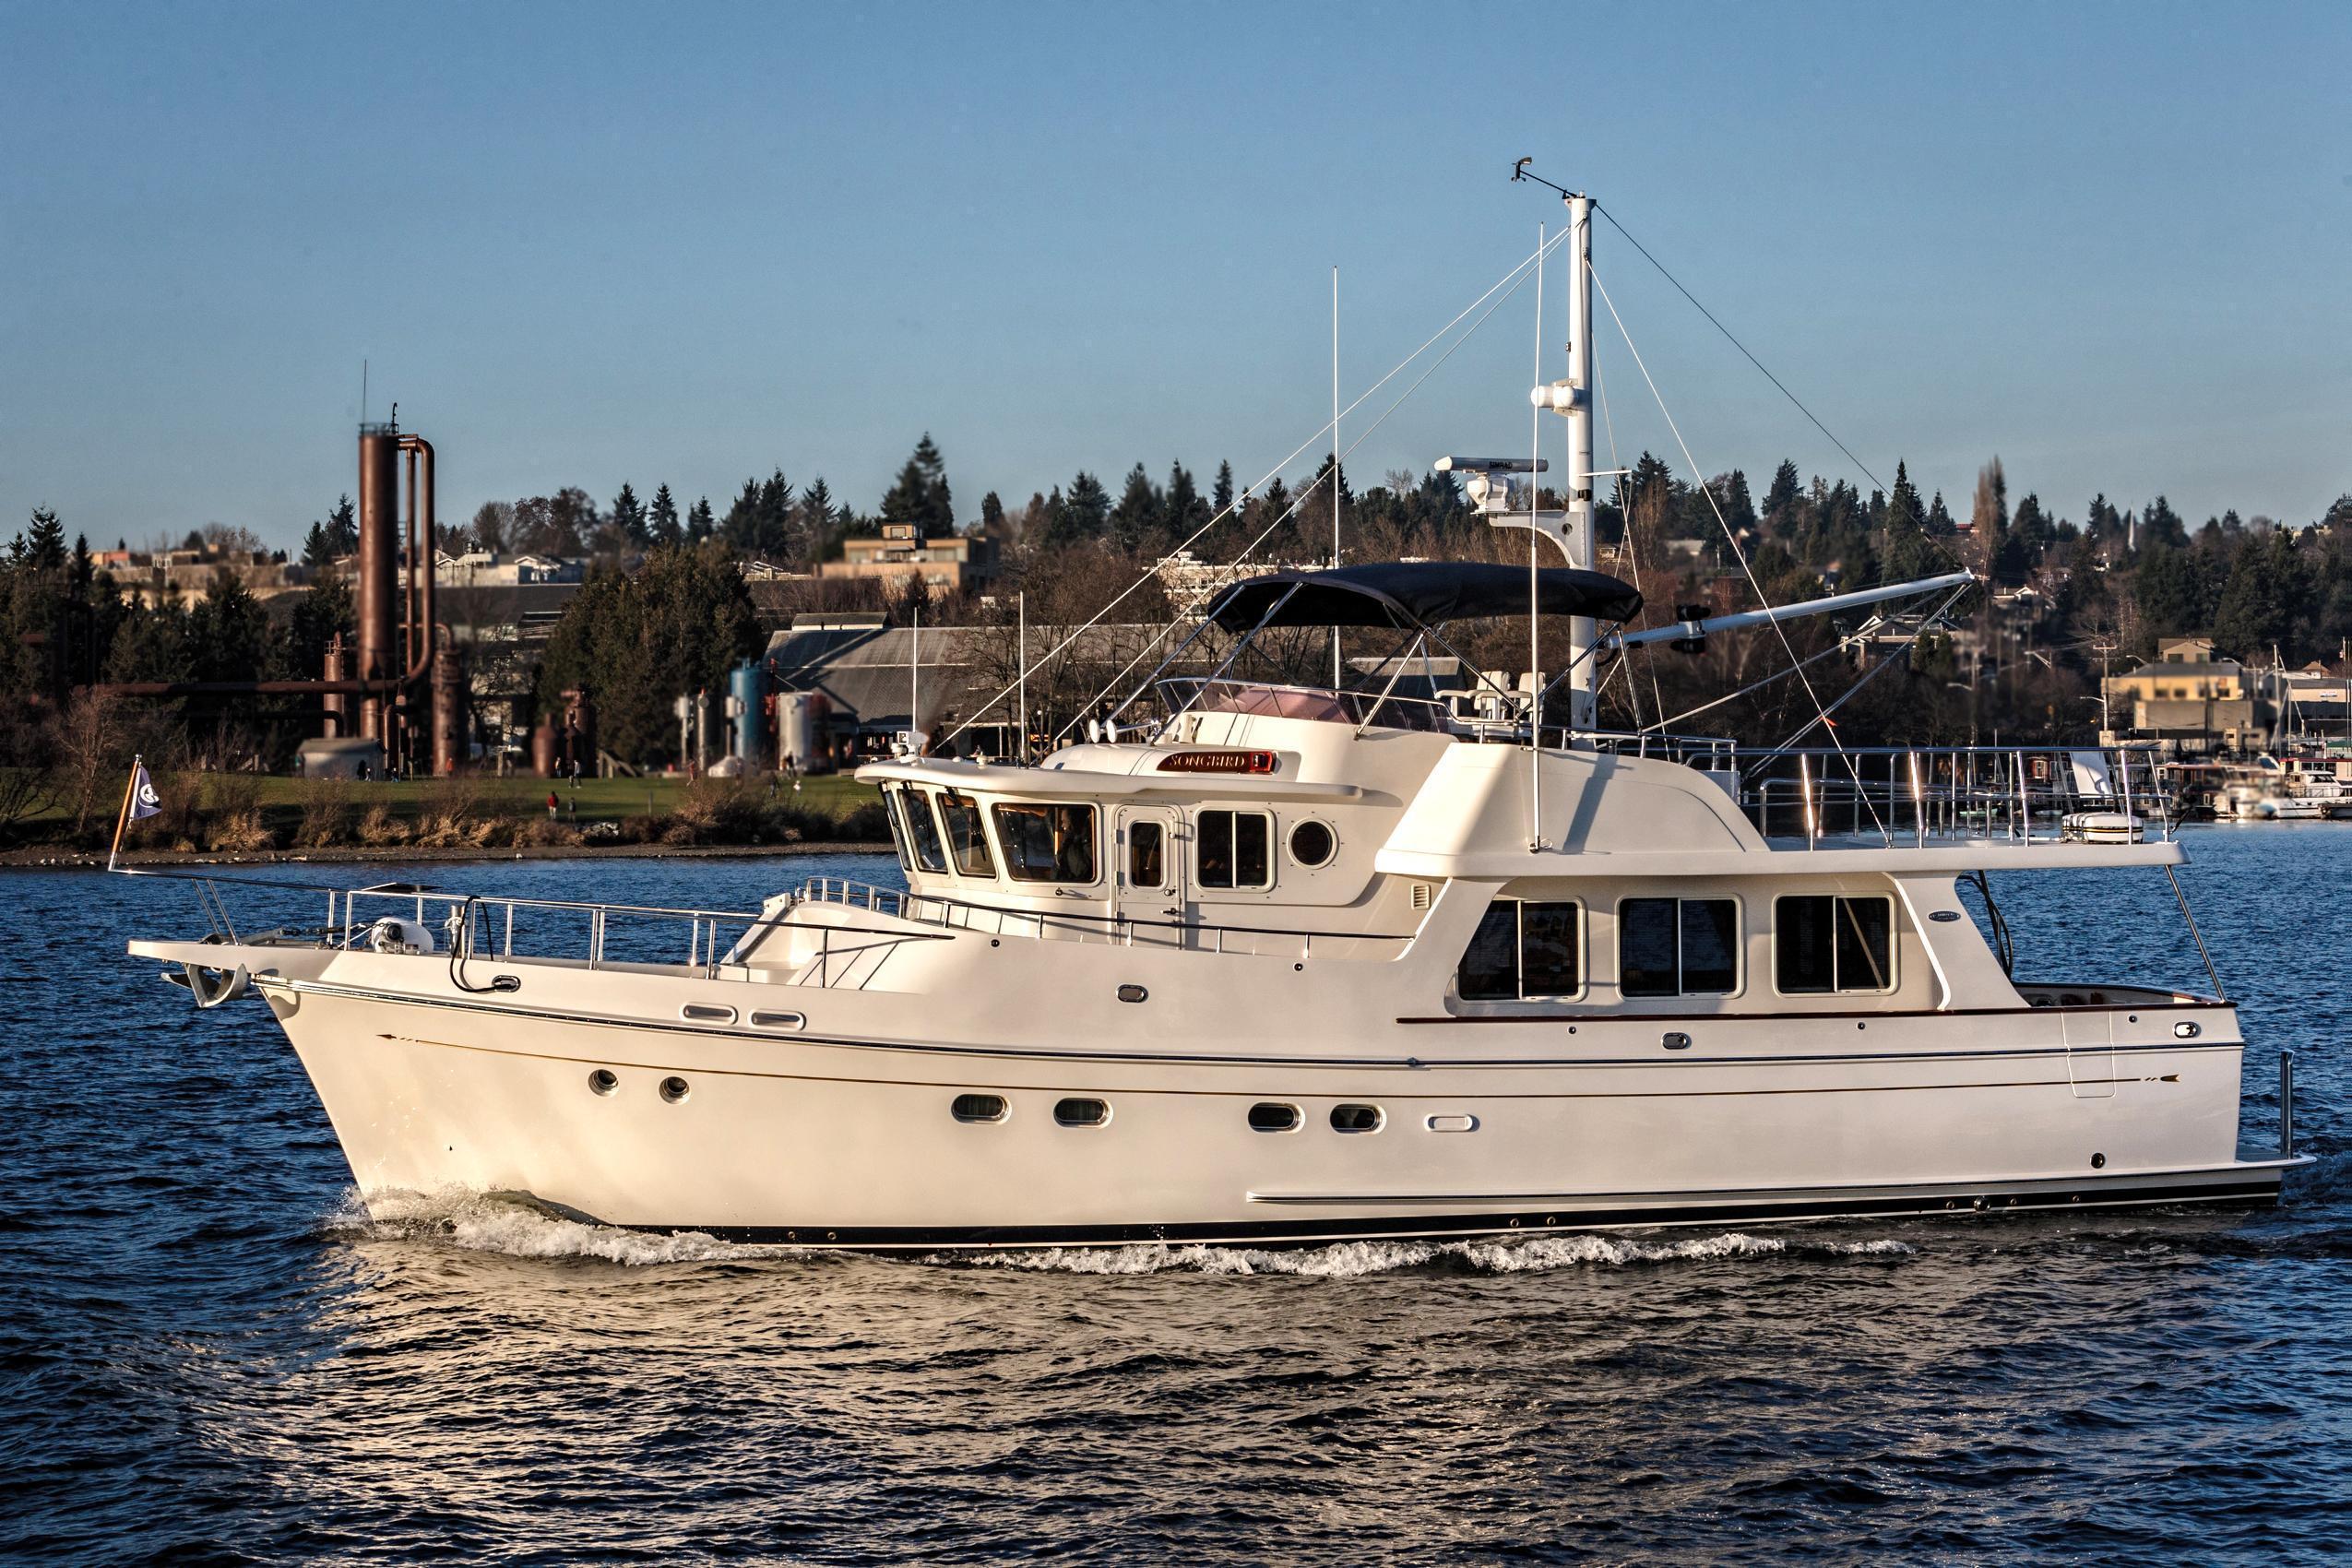 Selene 53 Ocean Trawler, Seattle